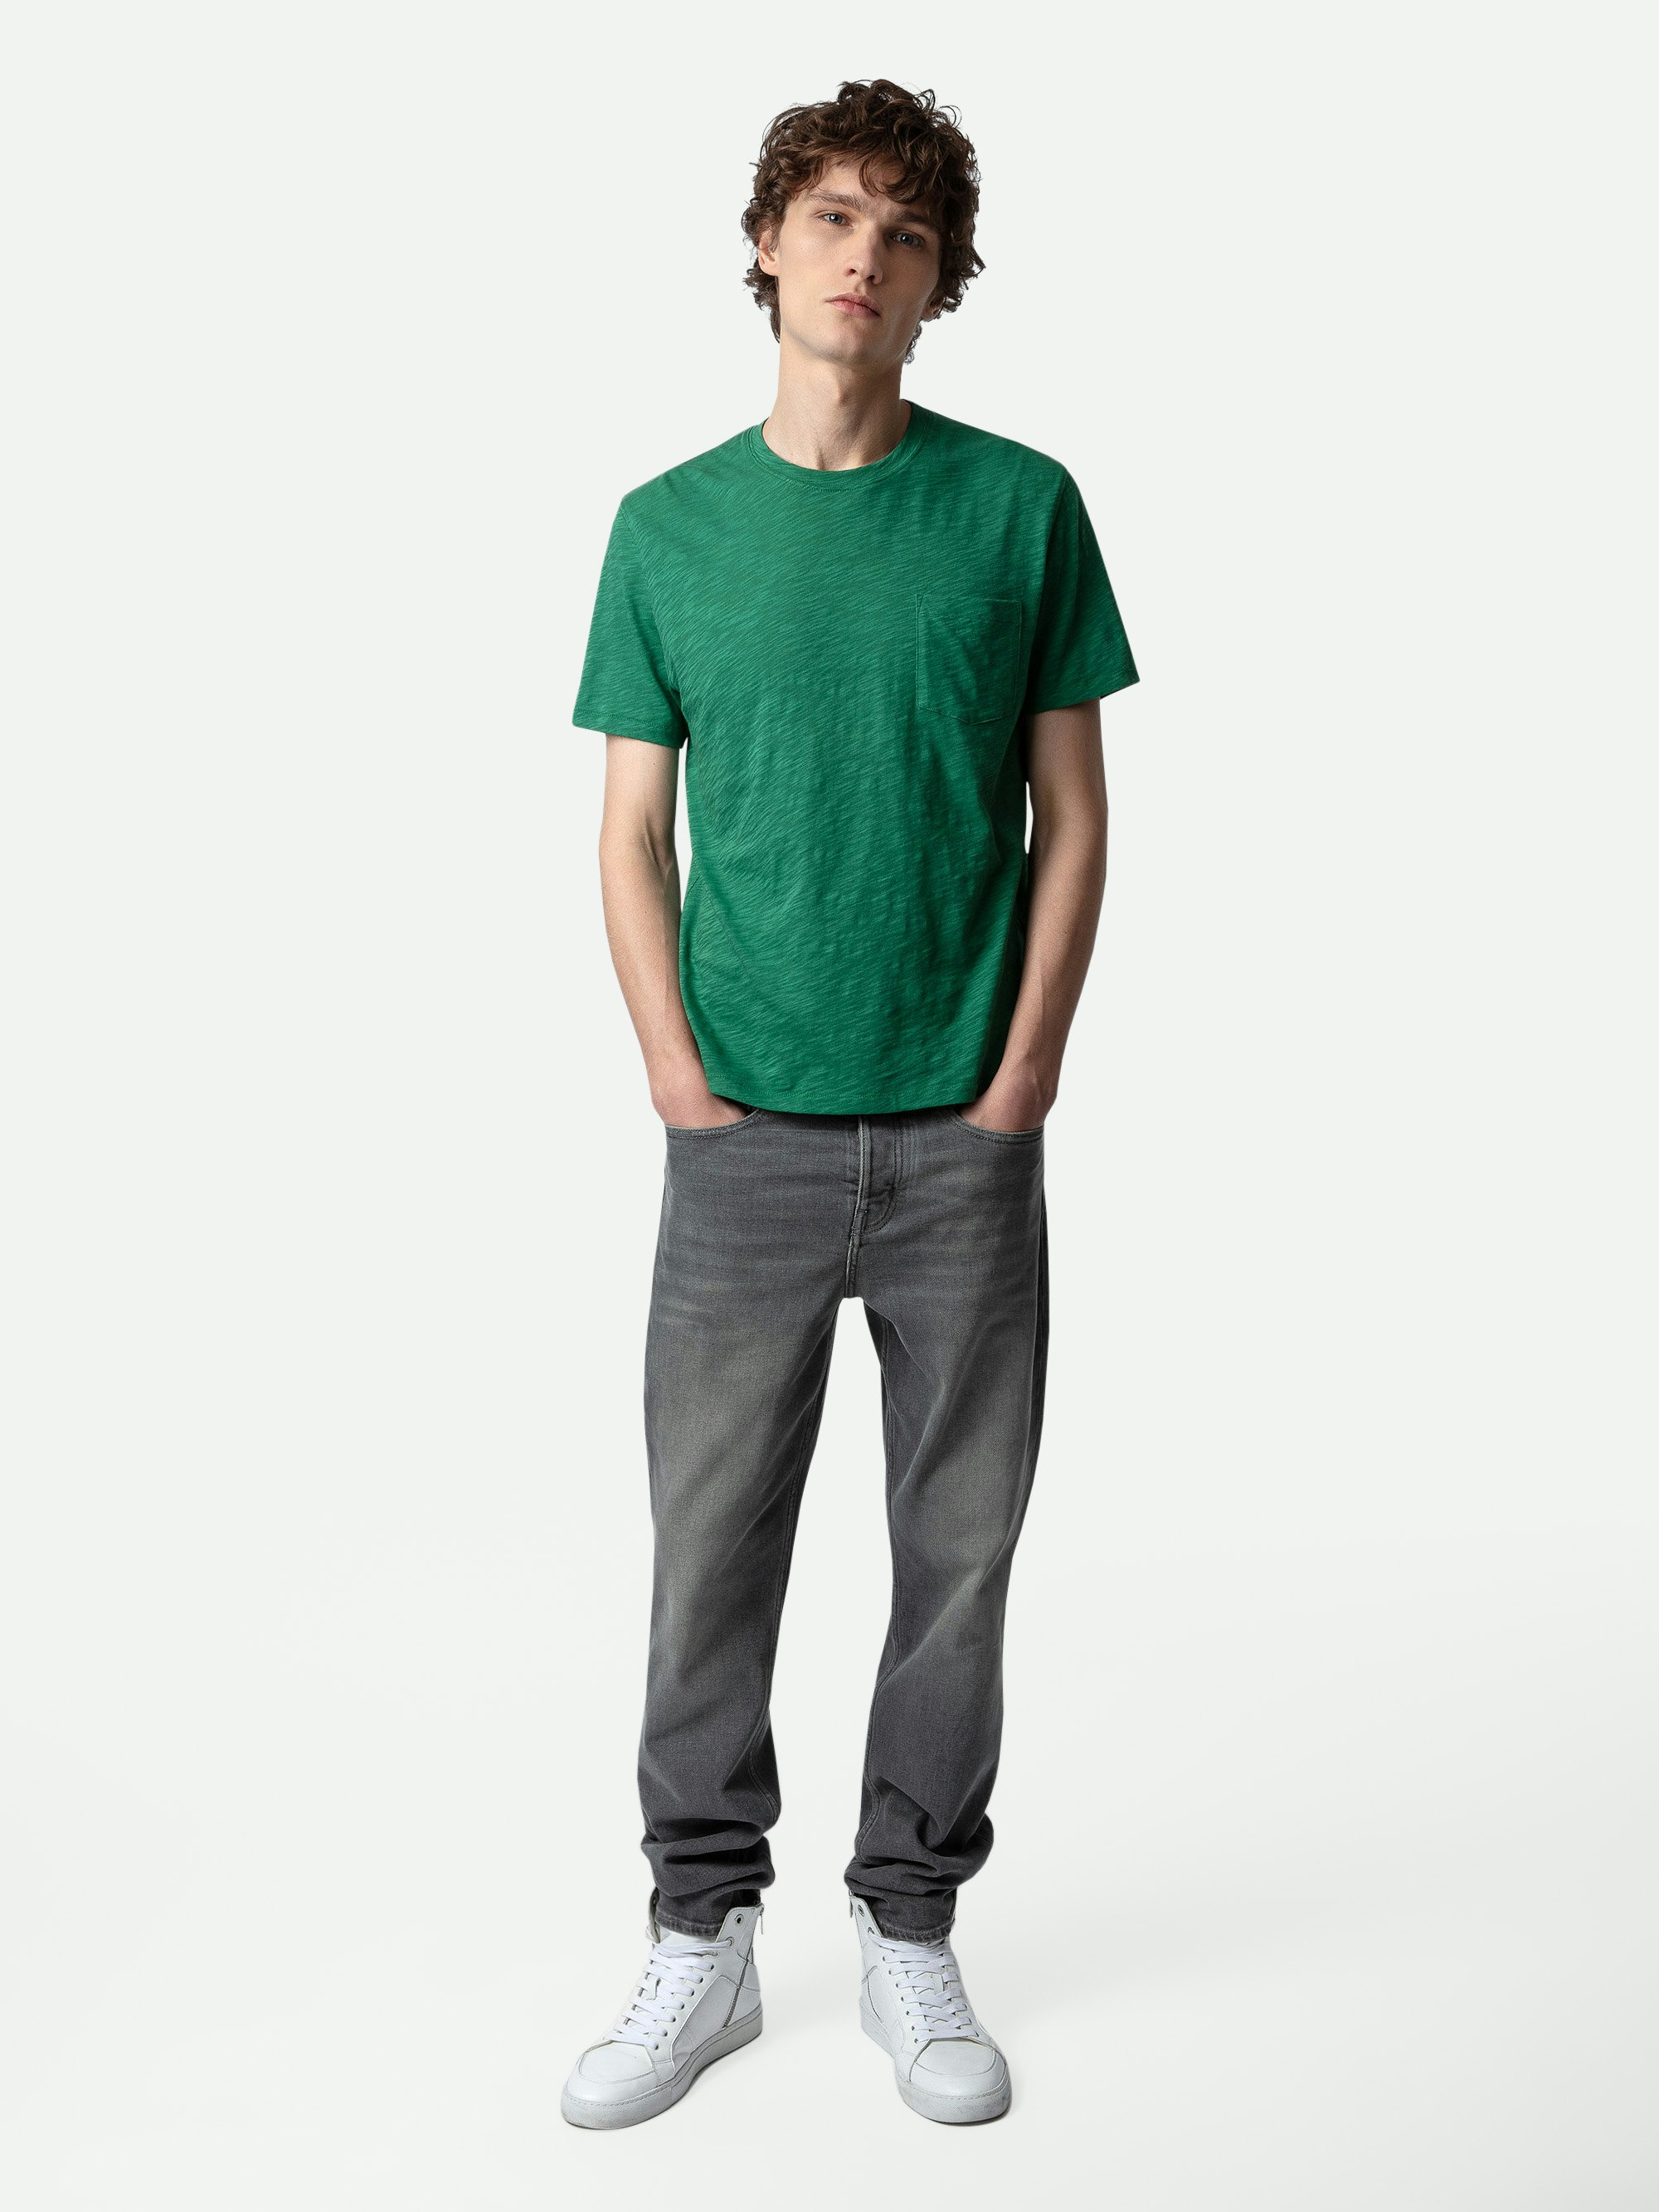 Stockholm Slub T-shirt - Green slub cotton short-sleeved T-shirt with pocket and Skull Block motif on the back.